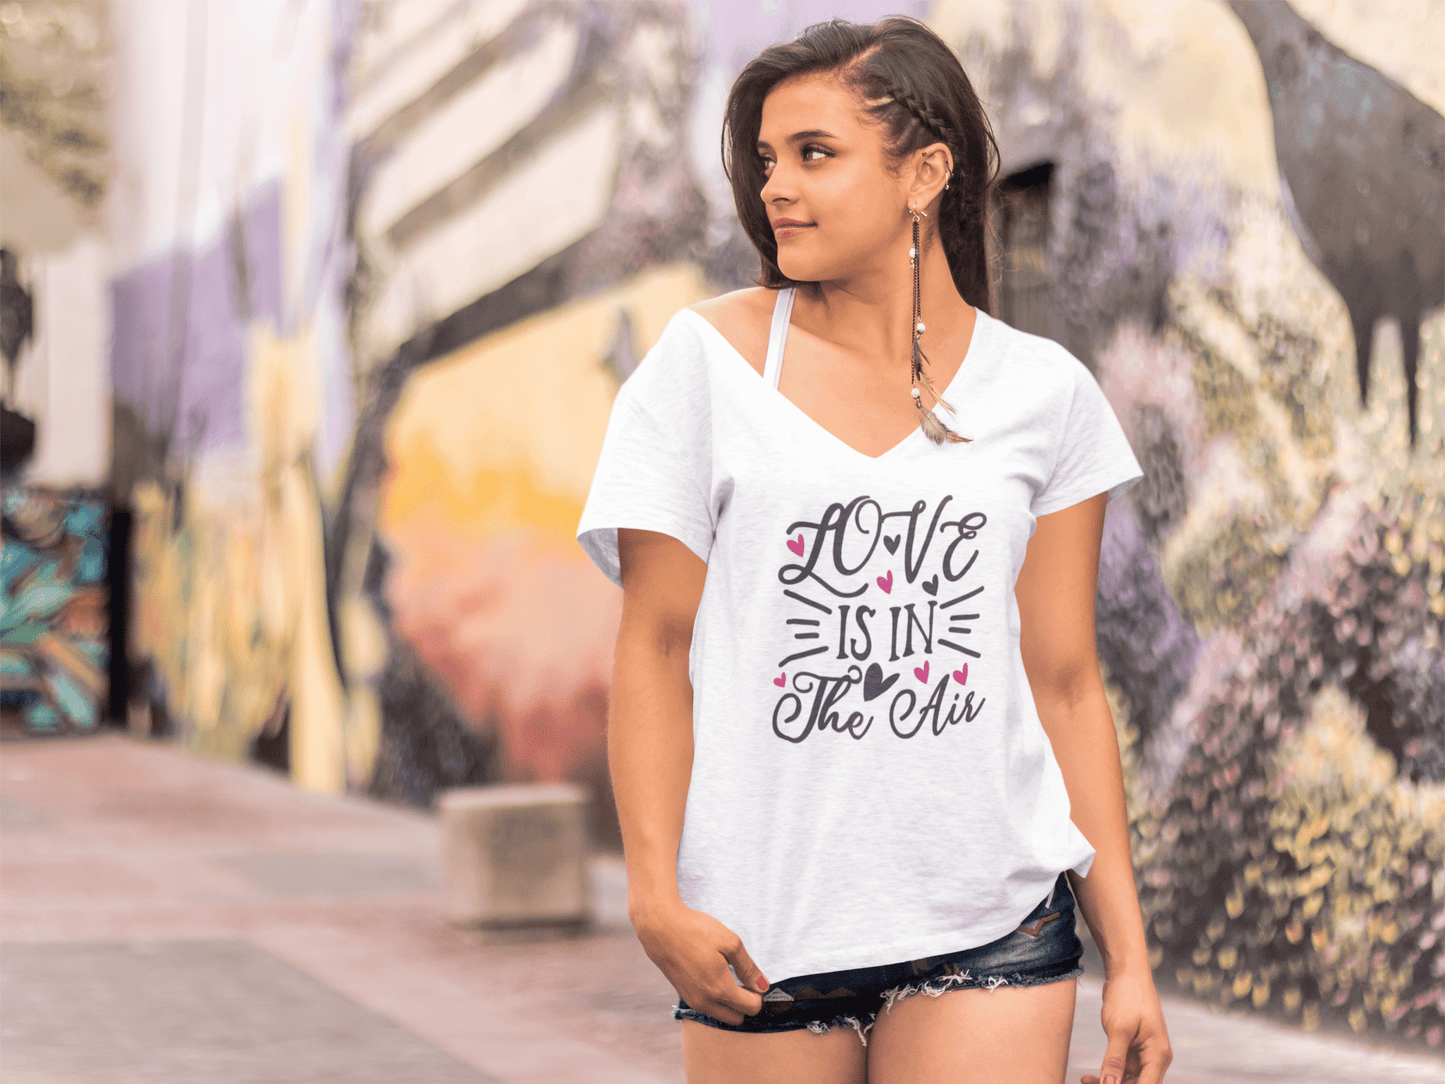 ULTRABASIC Women's T-Shirt Love is in the Air - Short Sleeve Tee Shirt Tops